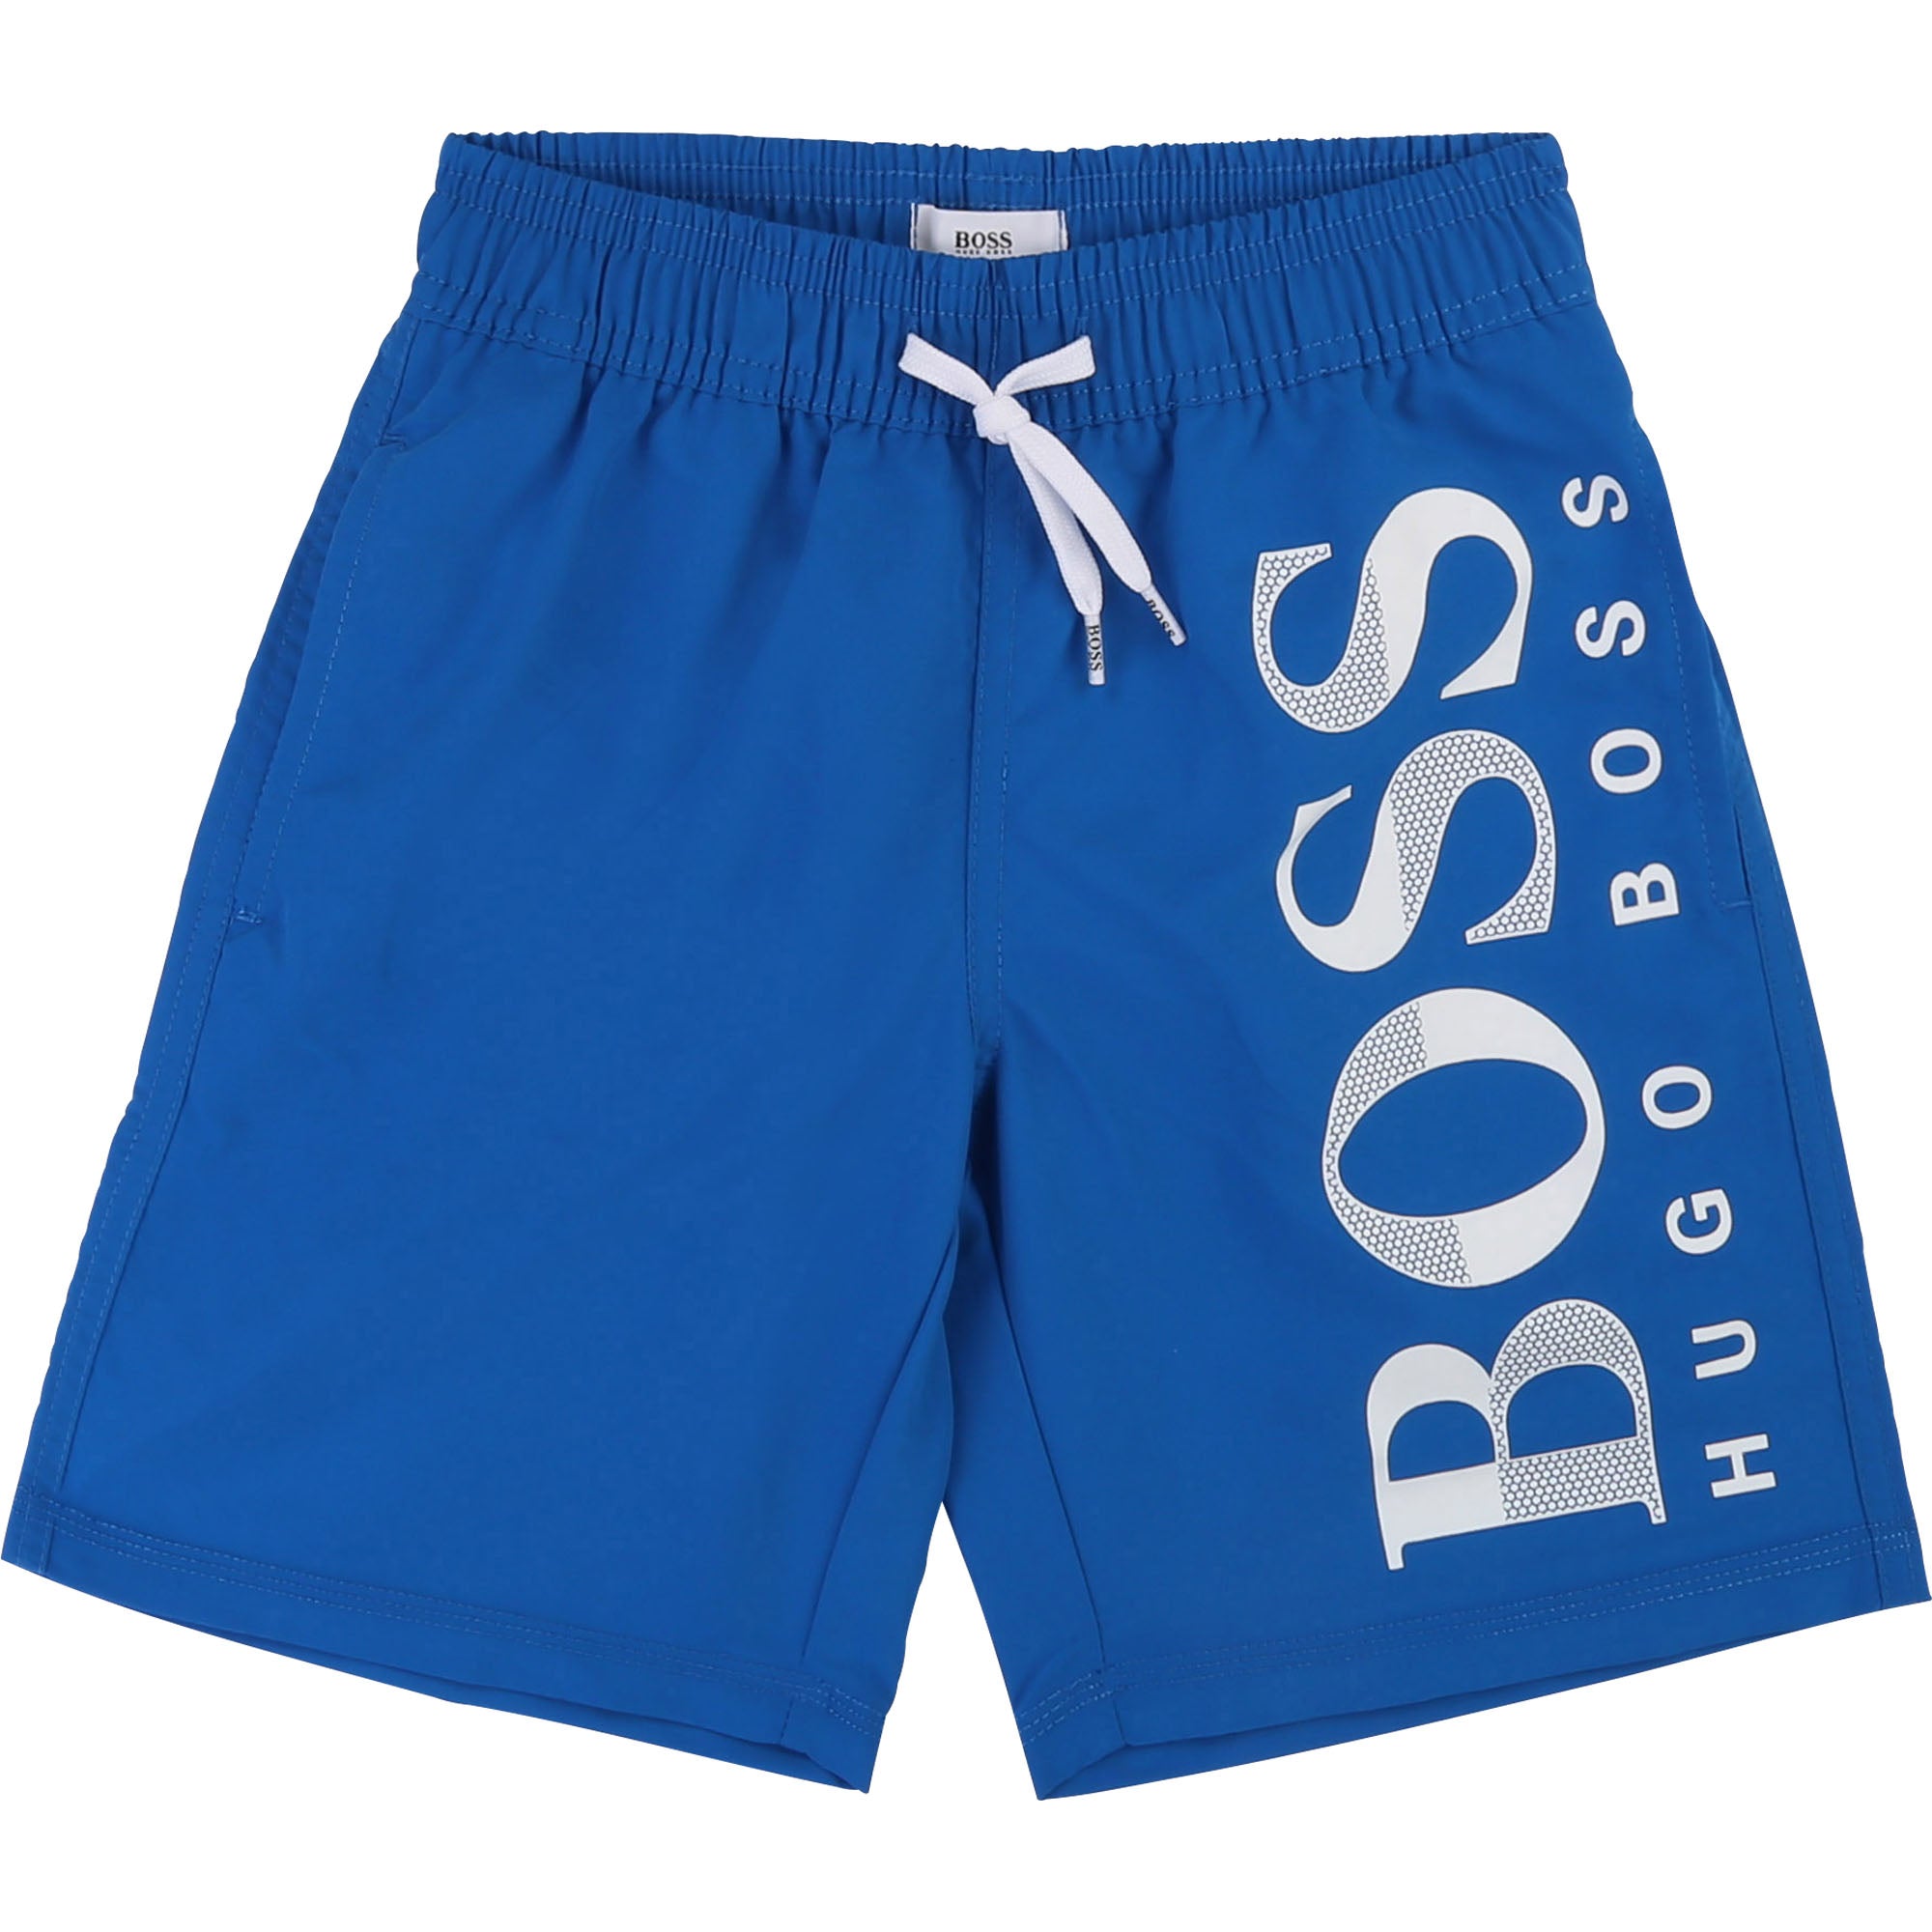 Boys Blue Surfer Shorts